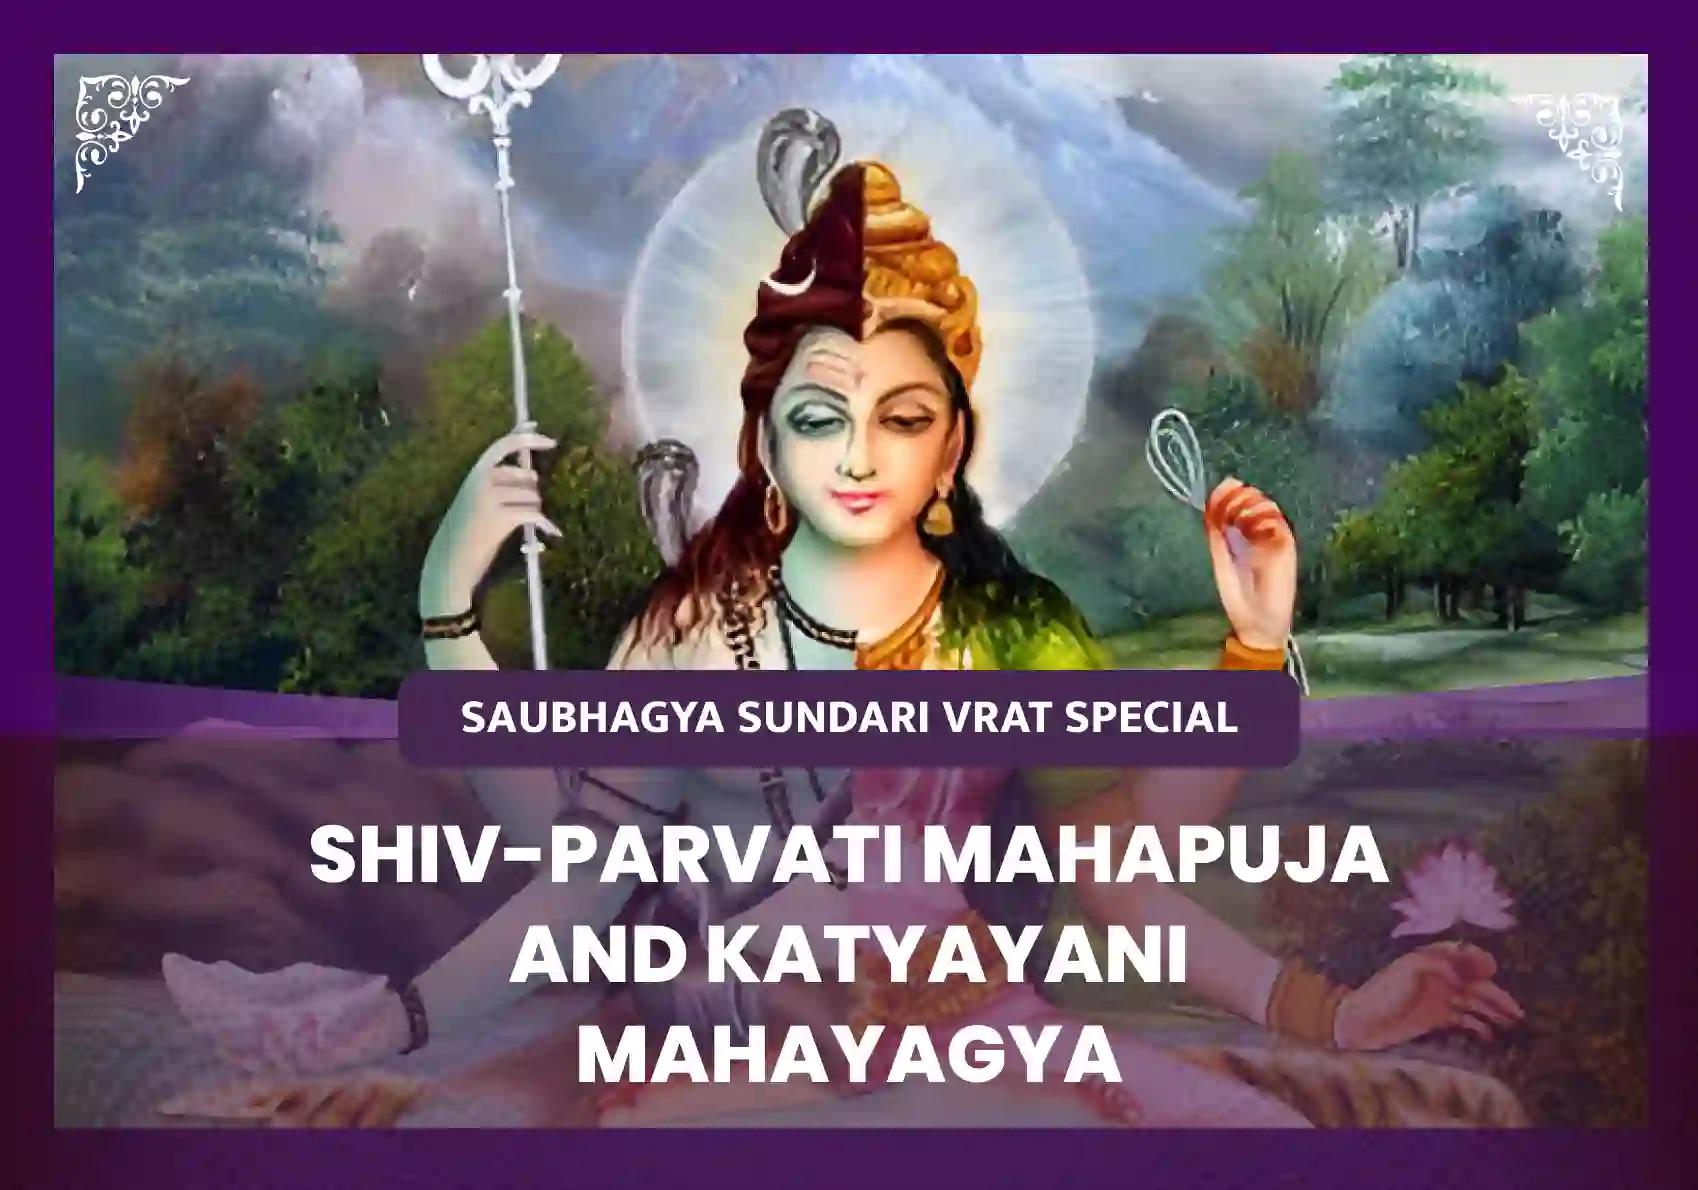 Saubhagya sundari vrat vishesh Shiv-Parvati Mahapuja and Katyayani Mahayagya